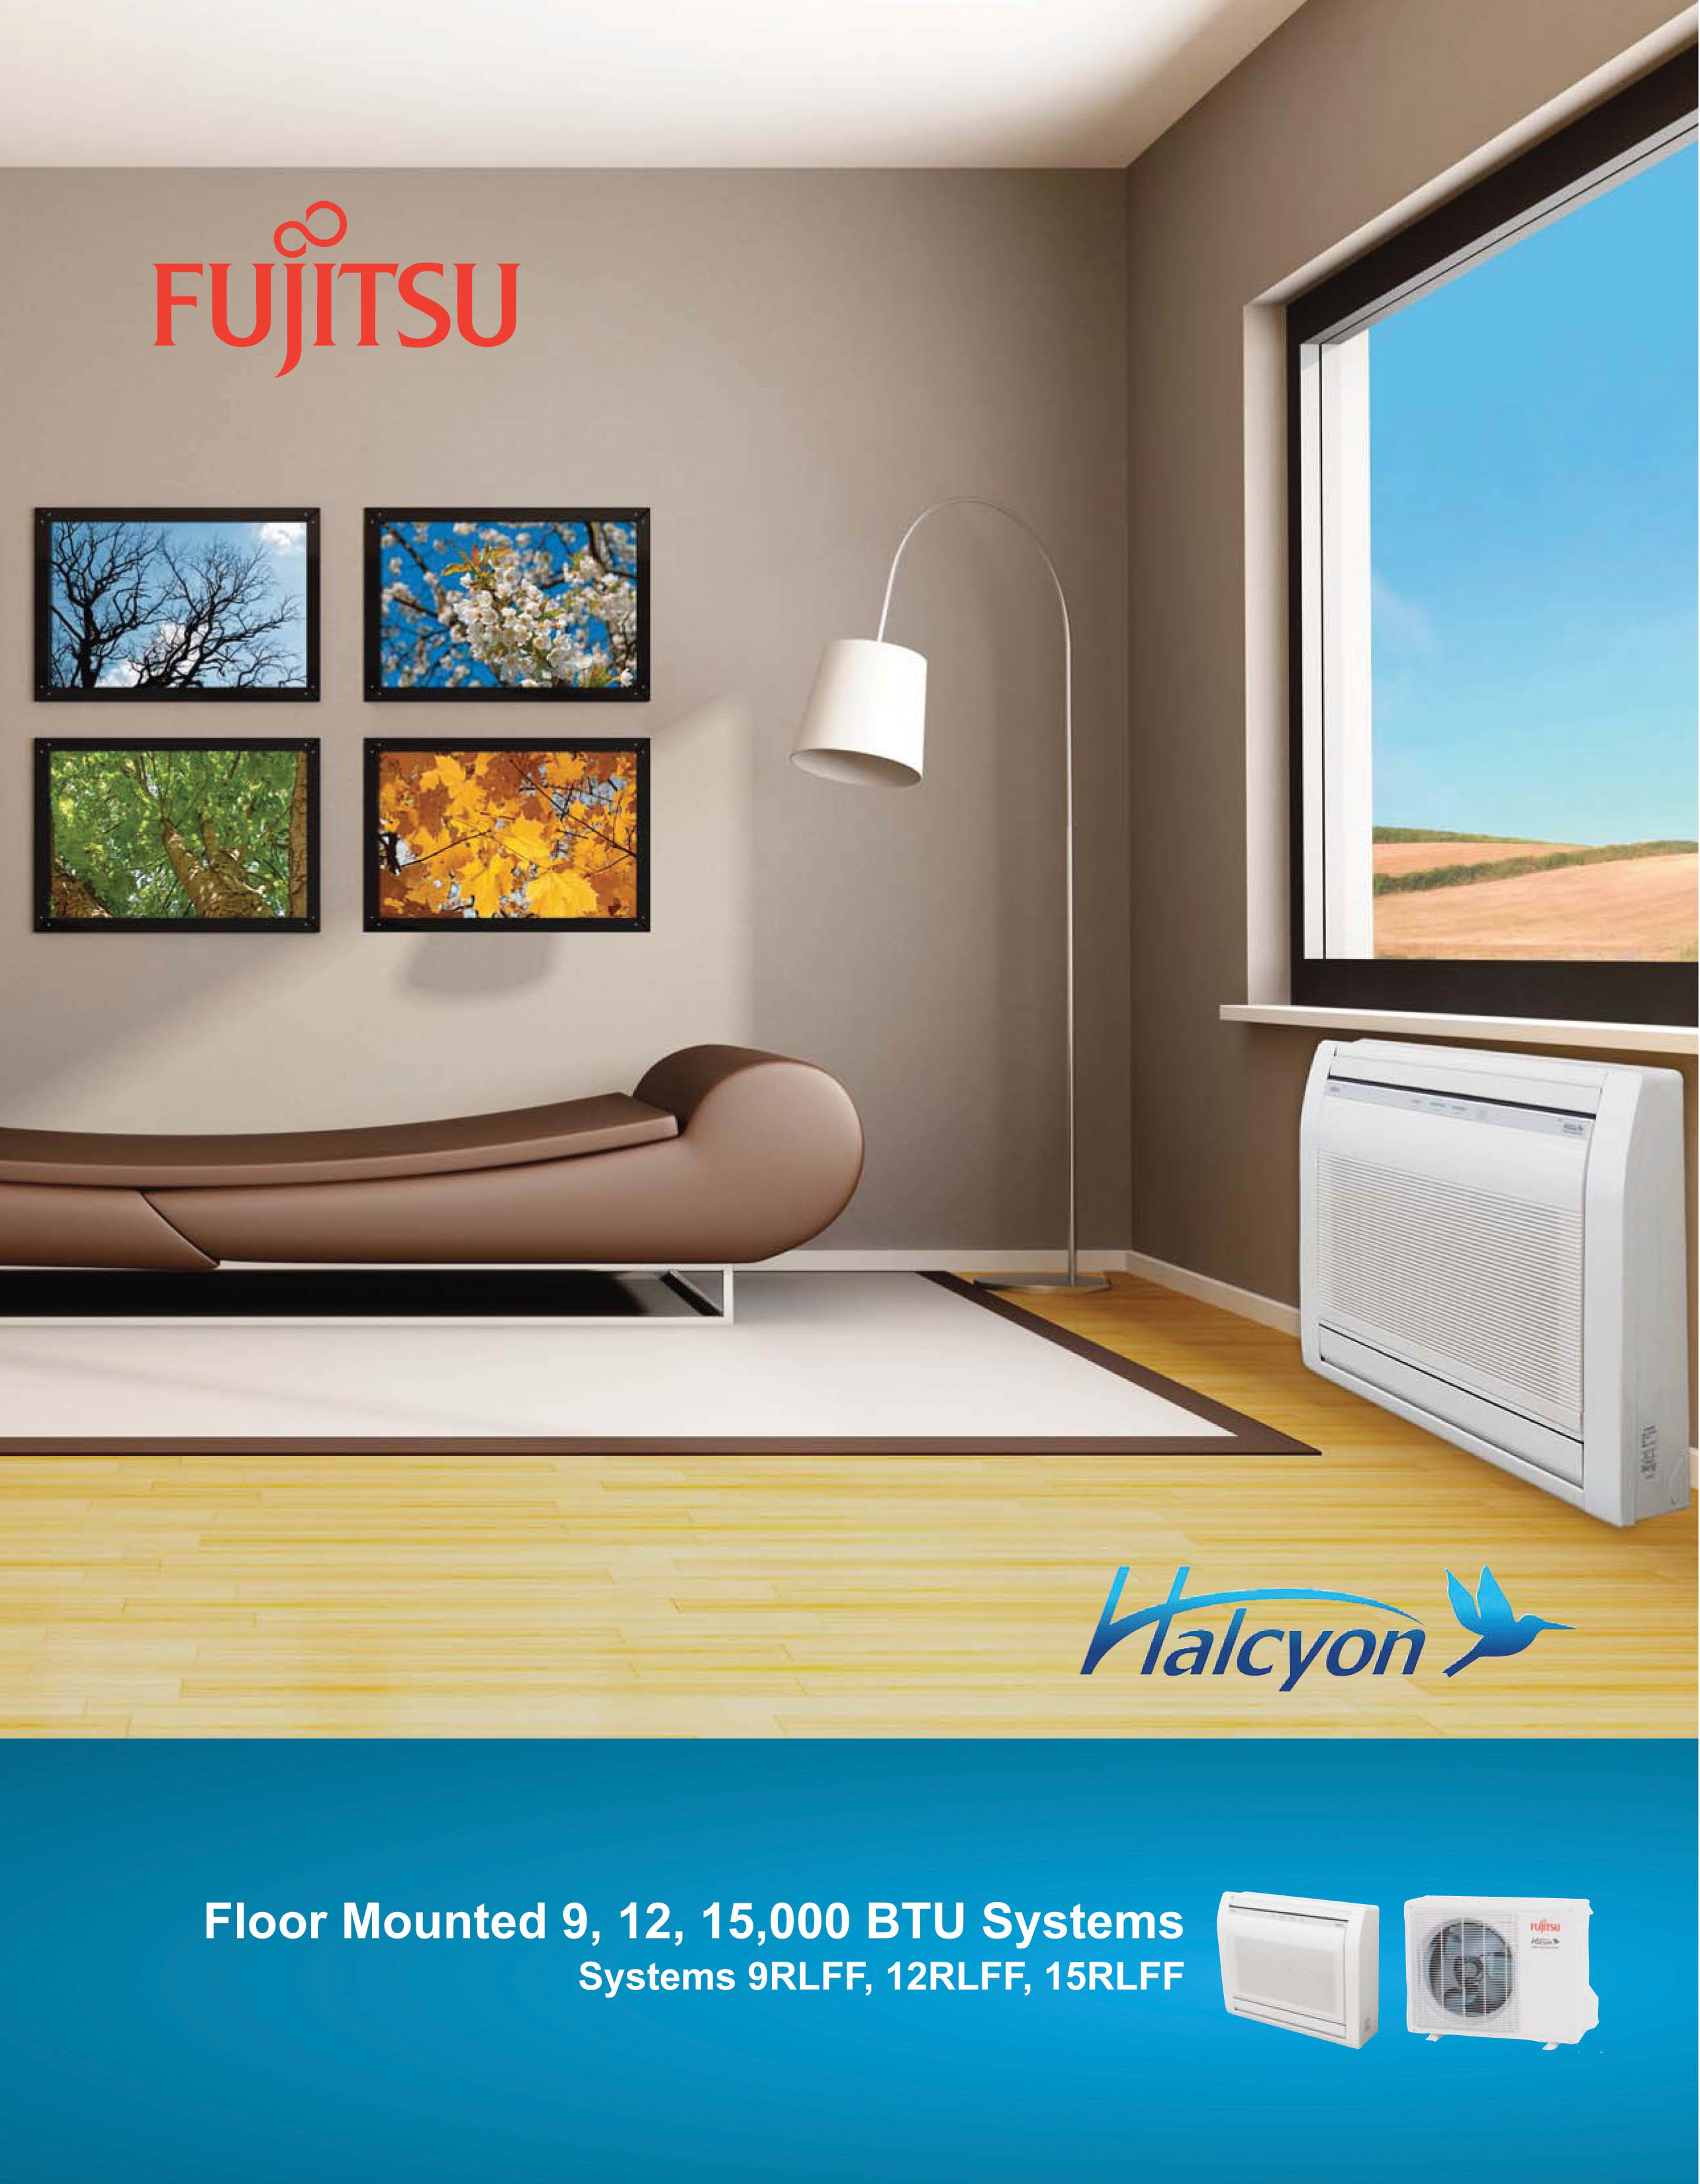 Fujitsu S New Floor Mounted Heat Pump Literature